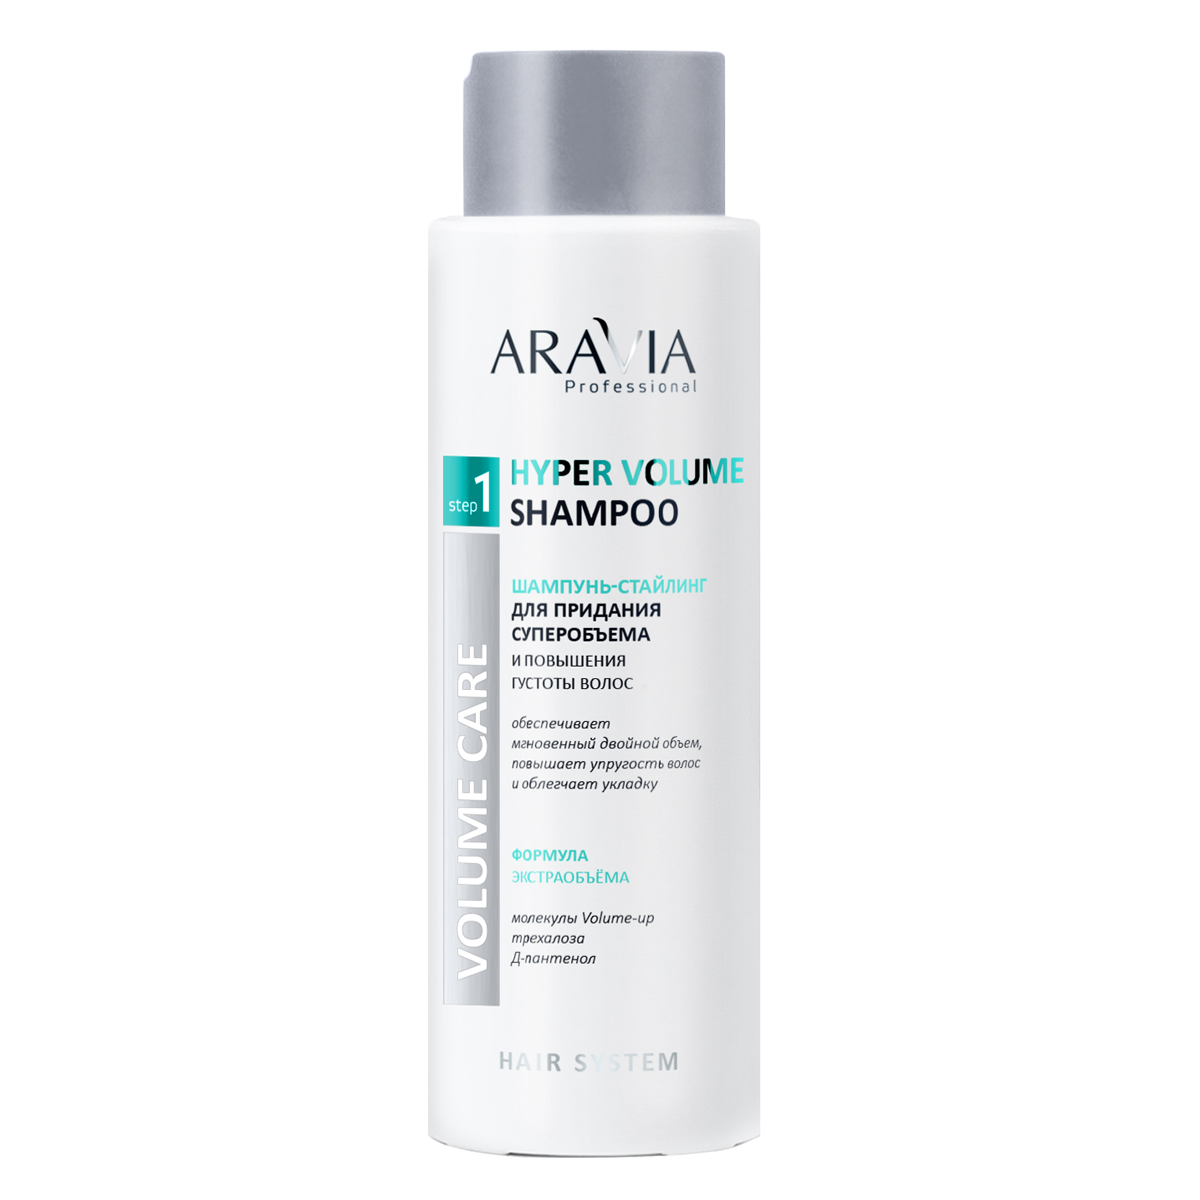 Aravia Professional Шампунь-стайлинг для придания суперобъема и повышения густоты волос Hyper Volume Shampoo, 400 мл (Aravia Professional, Уход за волосами)